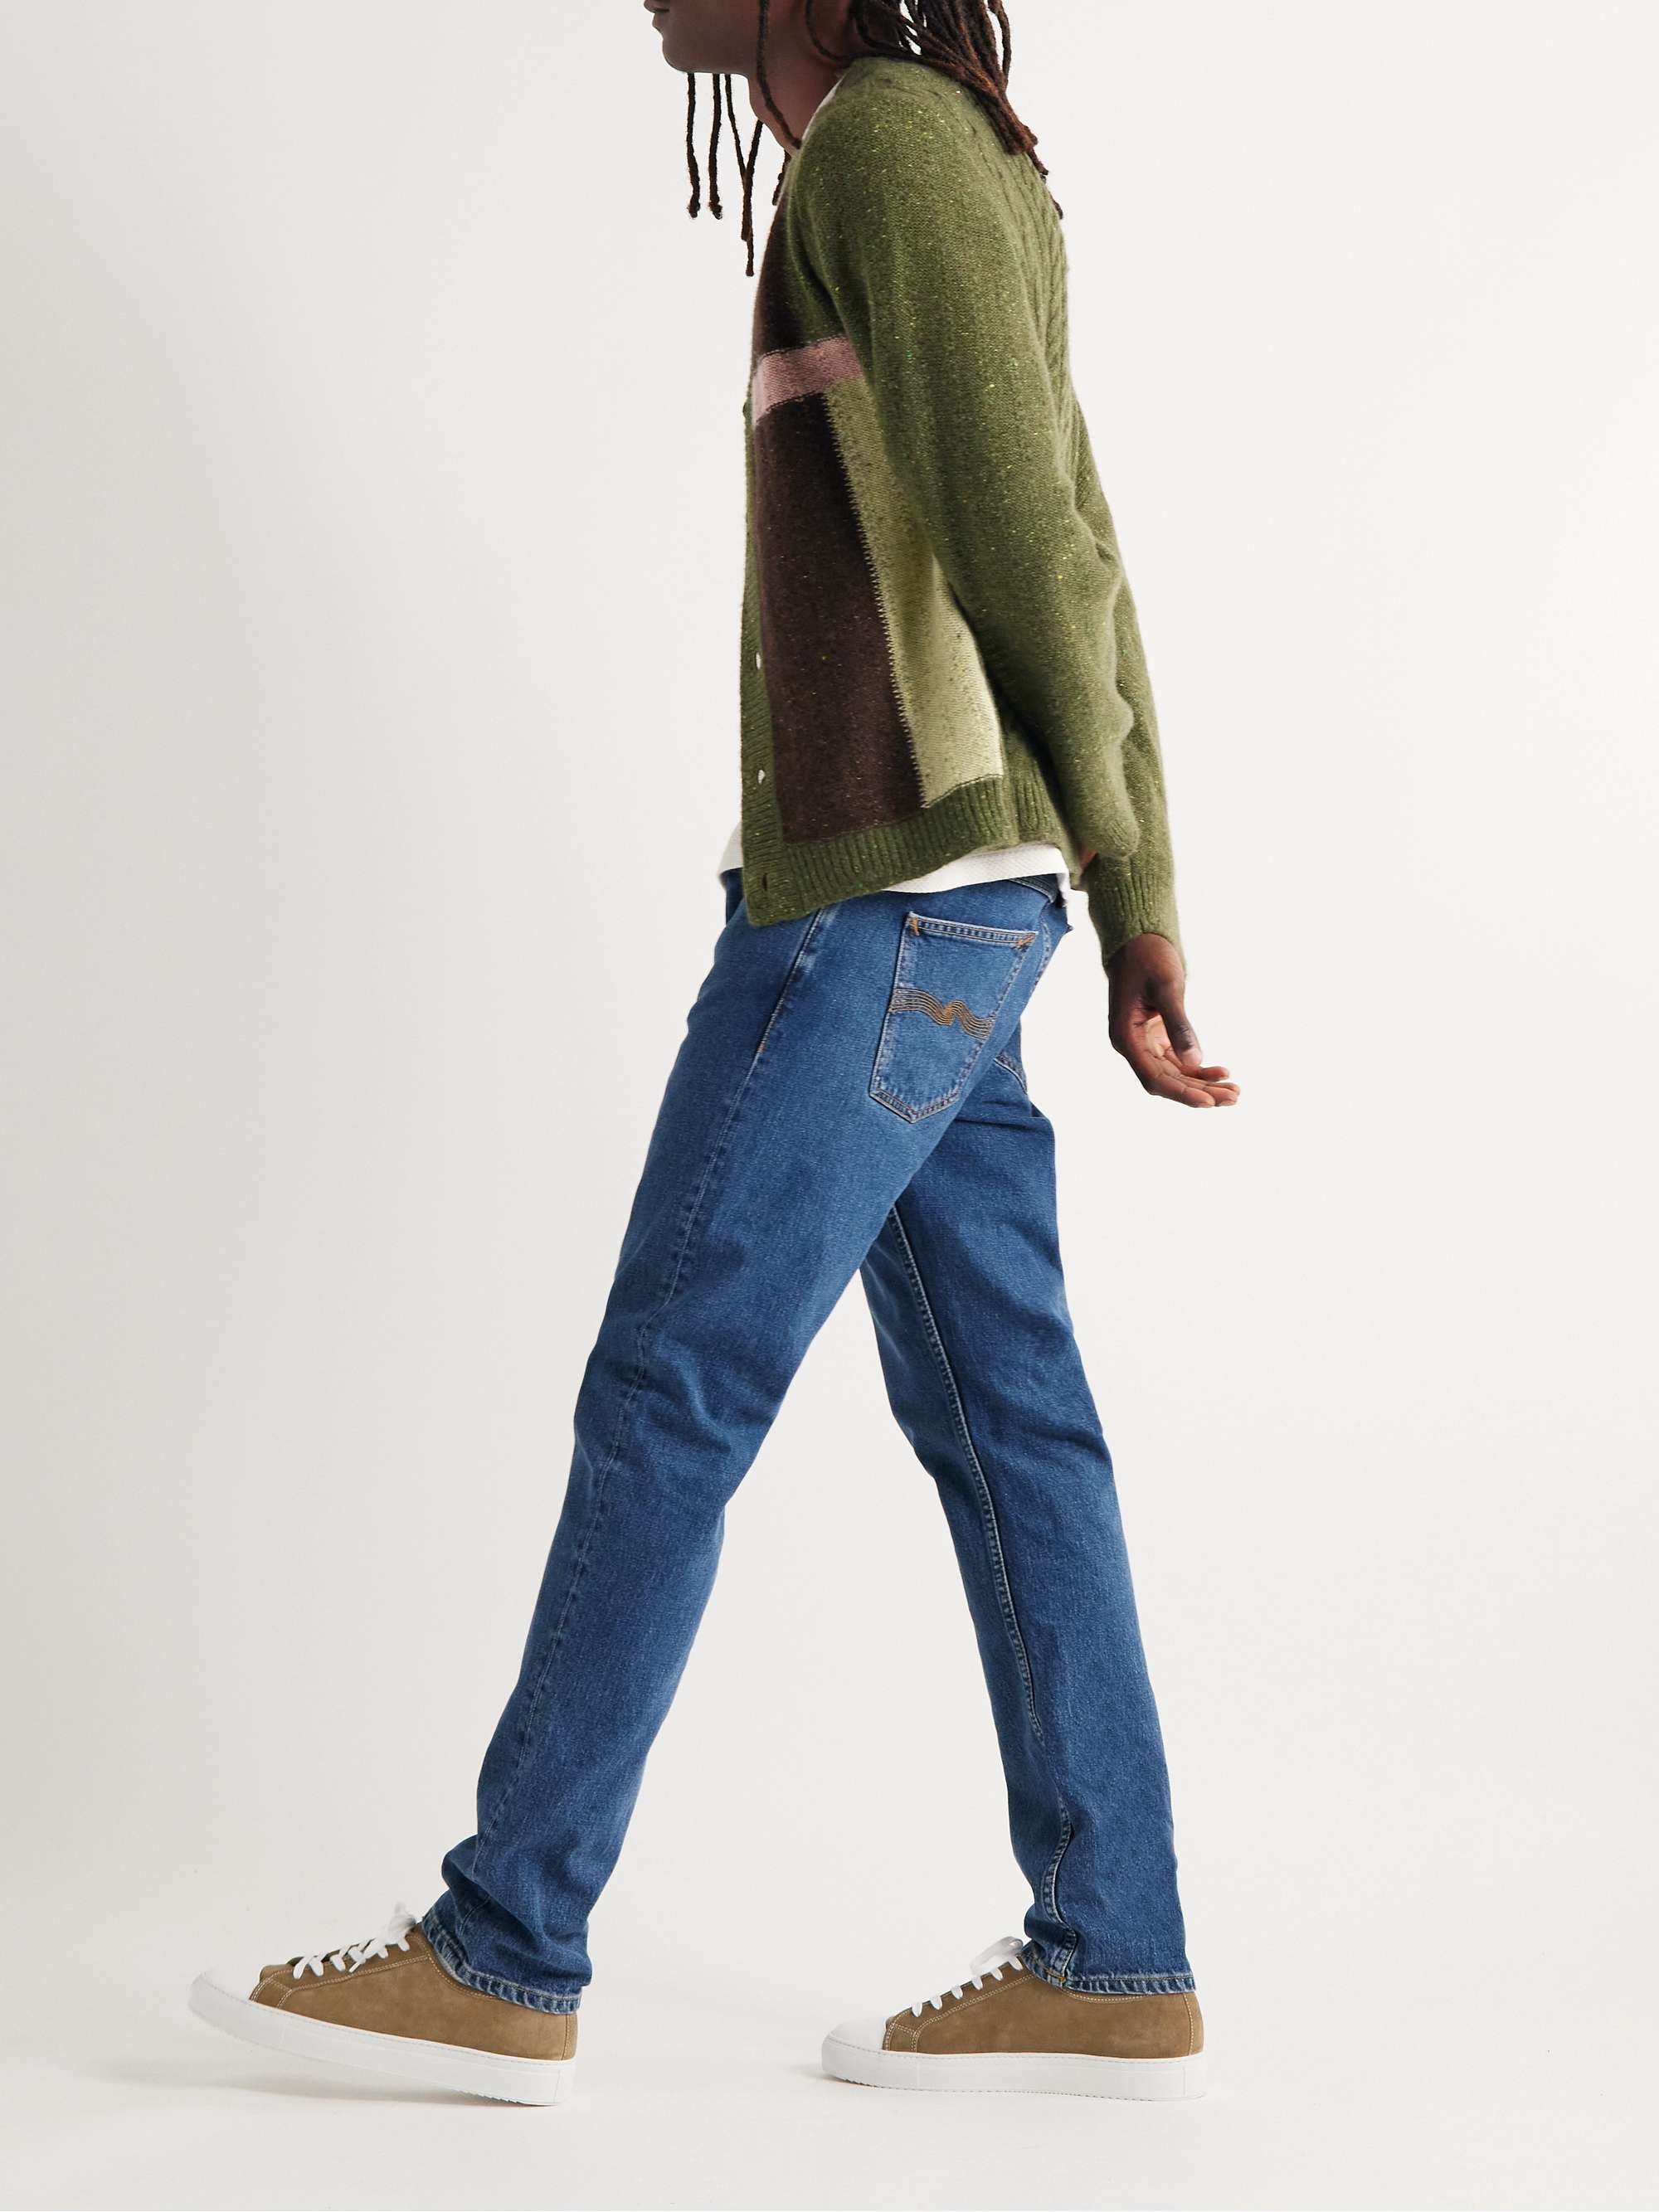 Details more than 138 nudie jeans stockholm